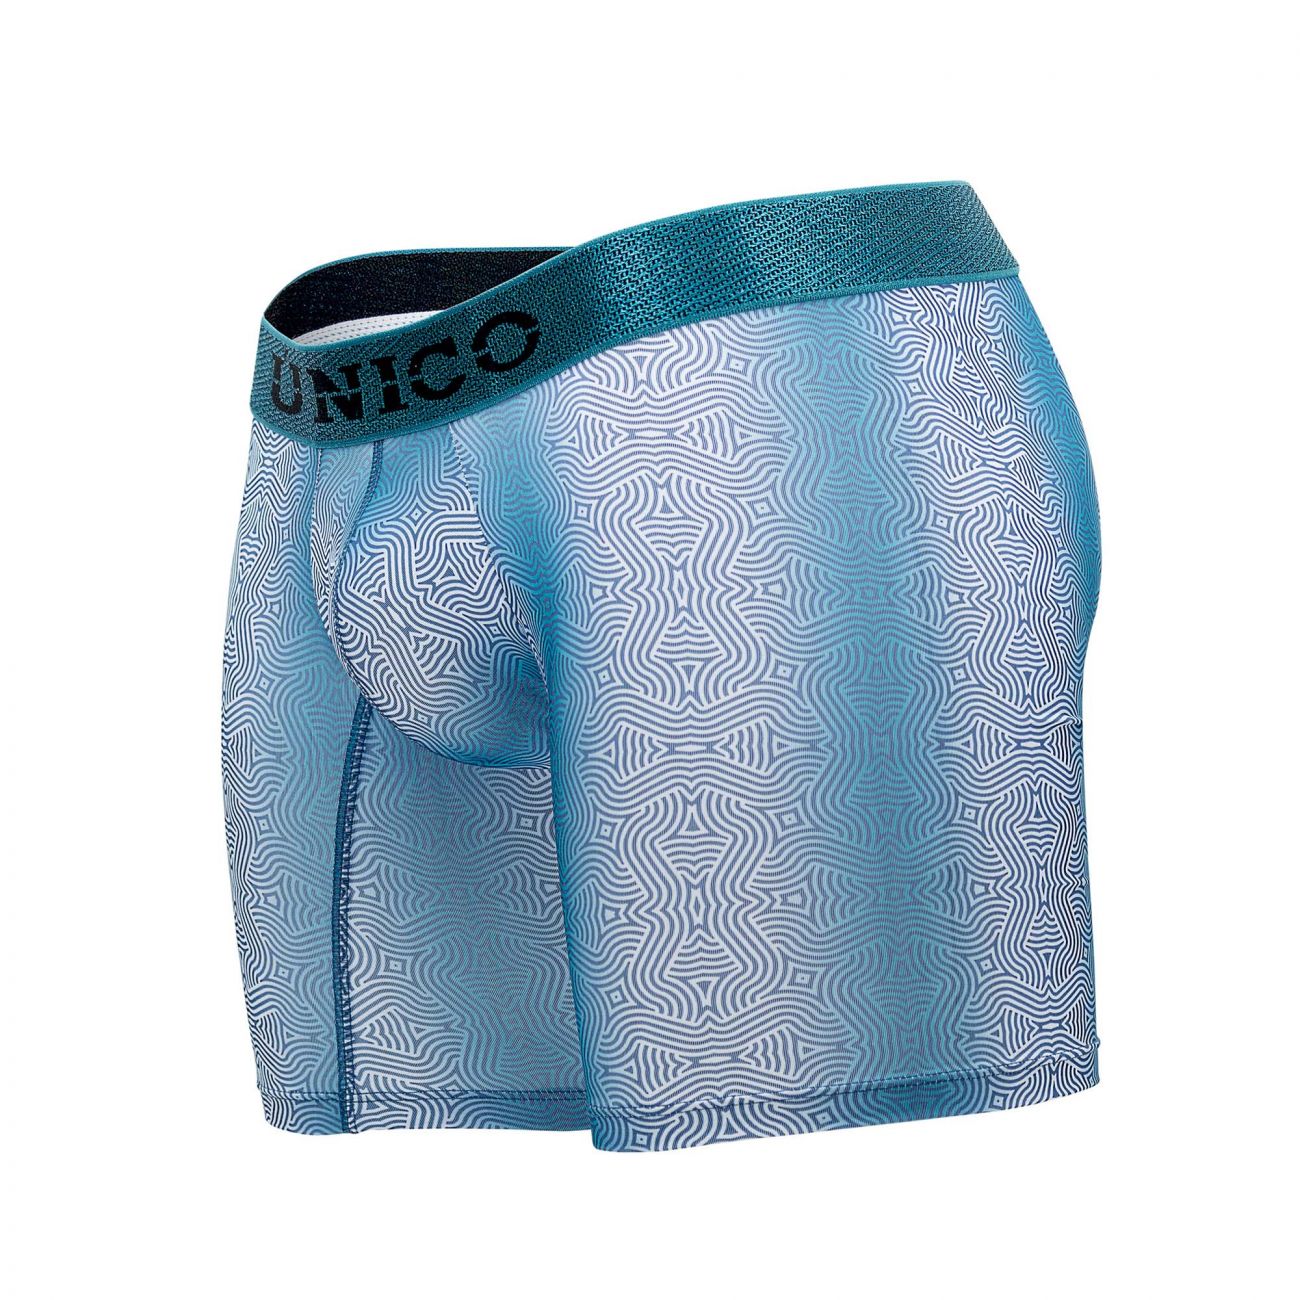 Mens Underwear: Unico 1908010026129 Boxer Briefs Luminiscente | eBay